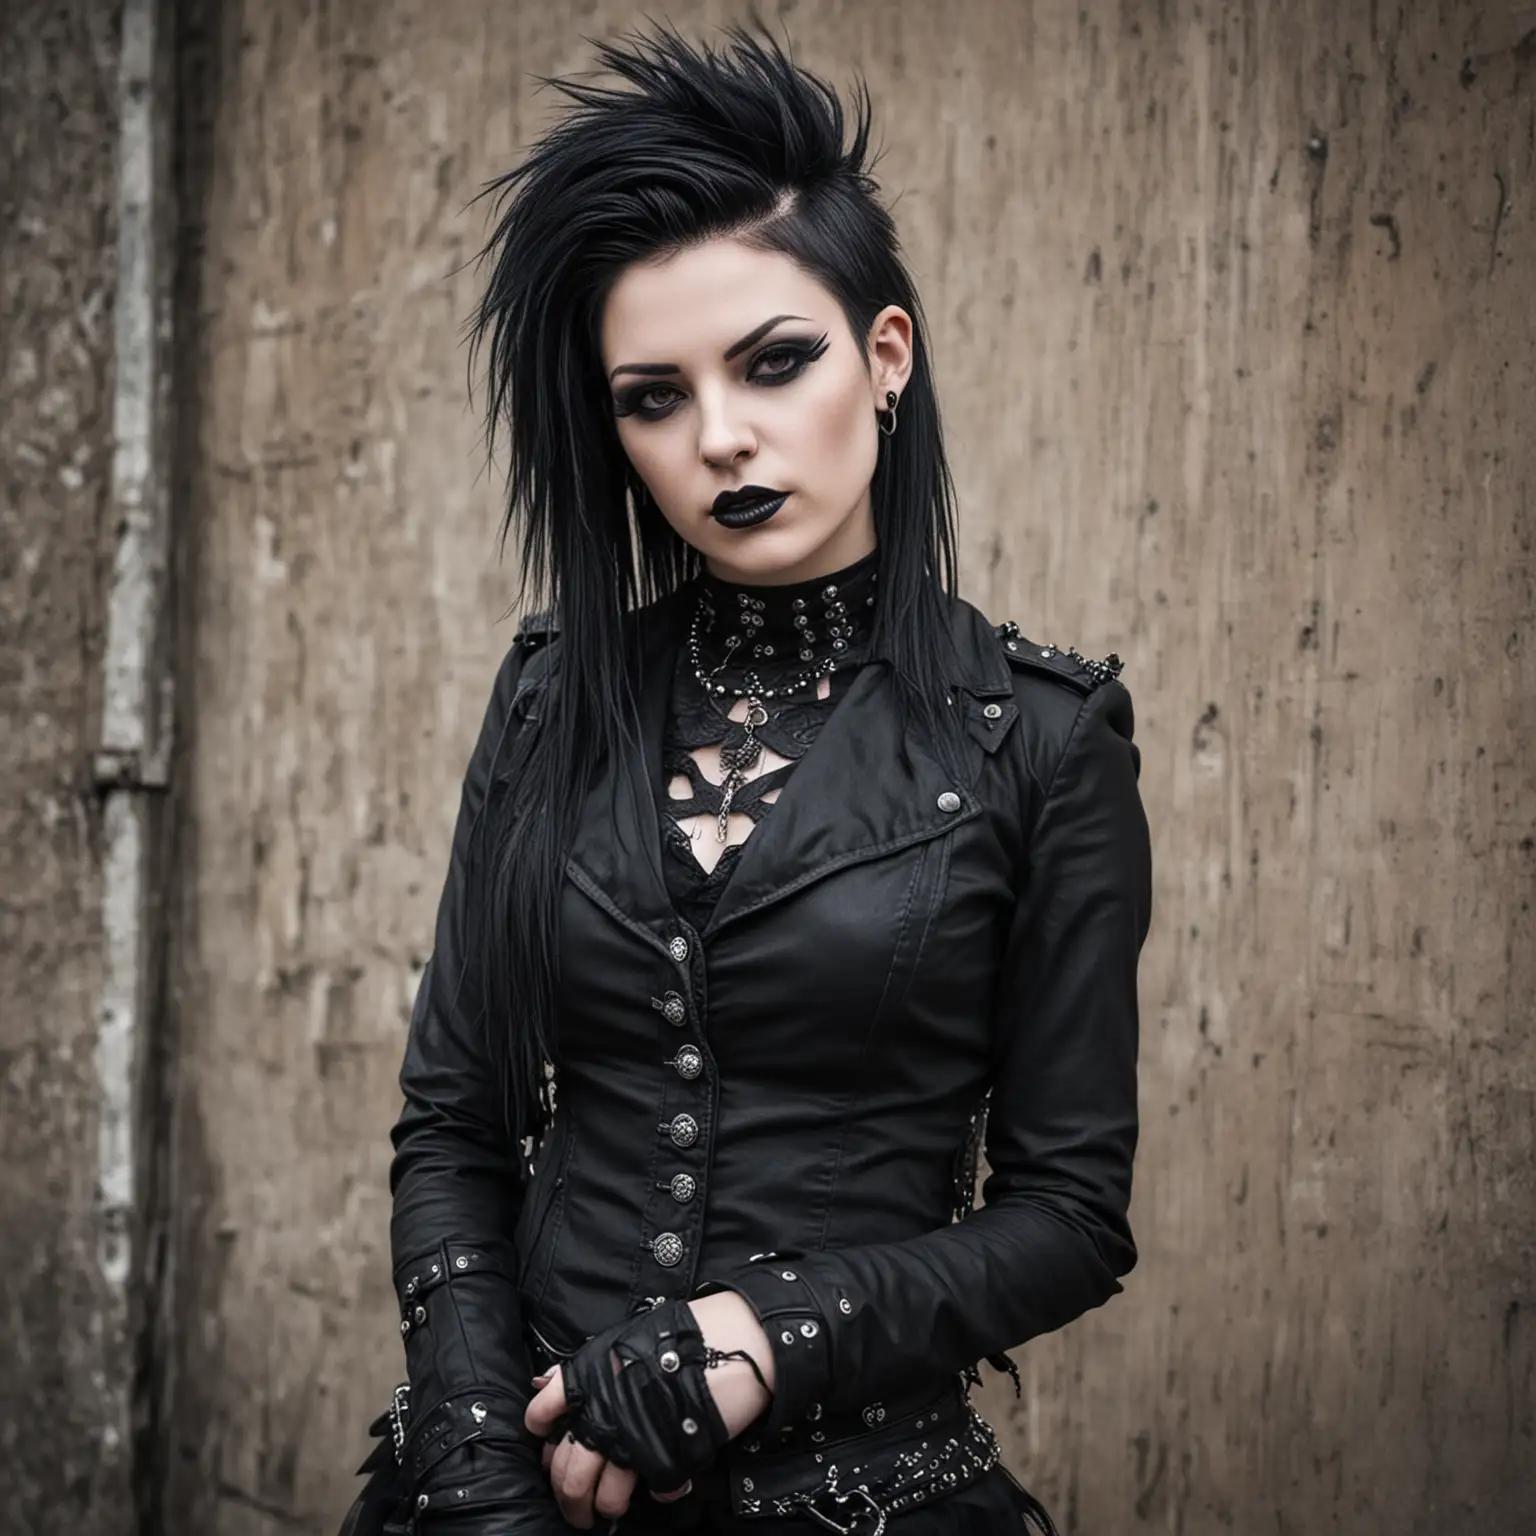 Stylish Goth Punk Woman with Edgy Fashion and Attitude